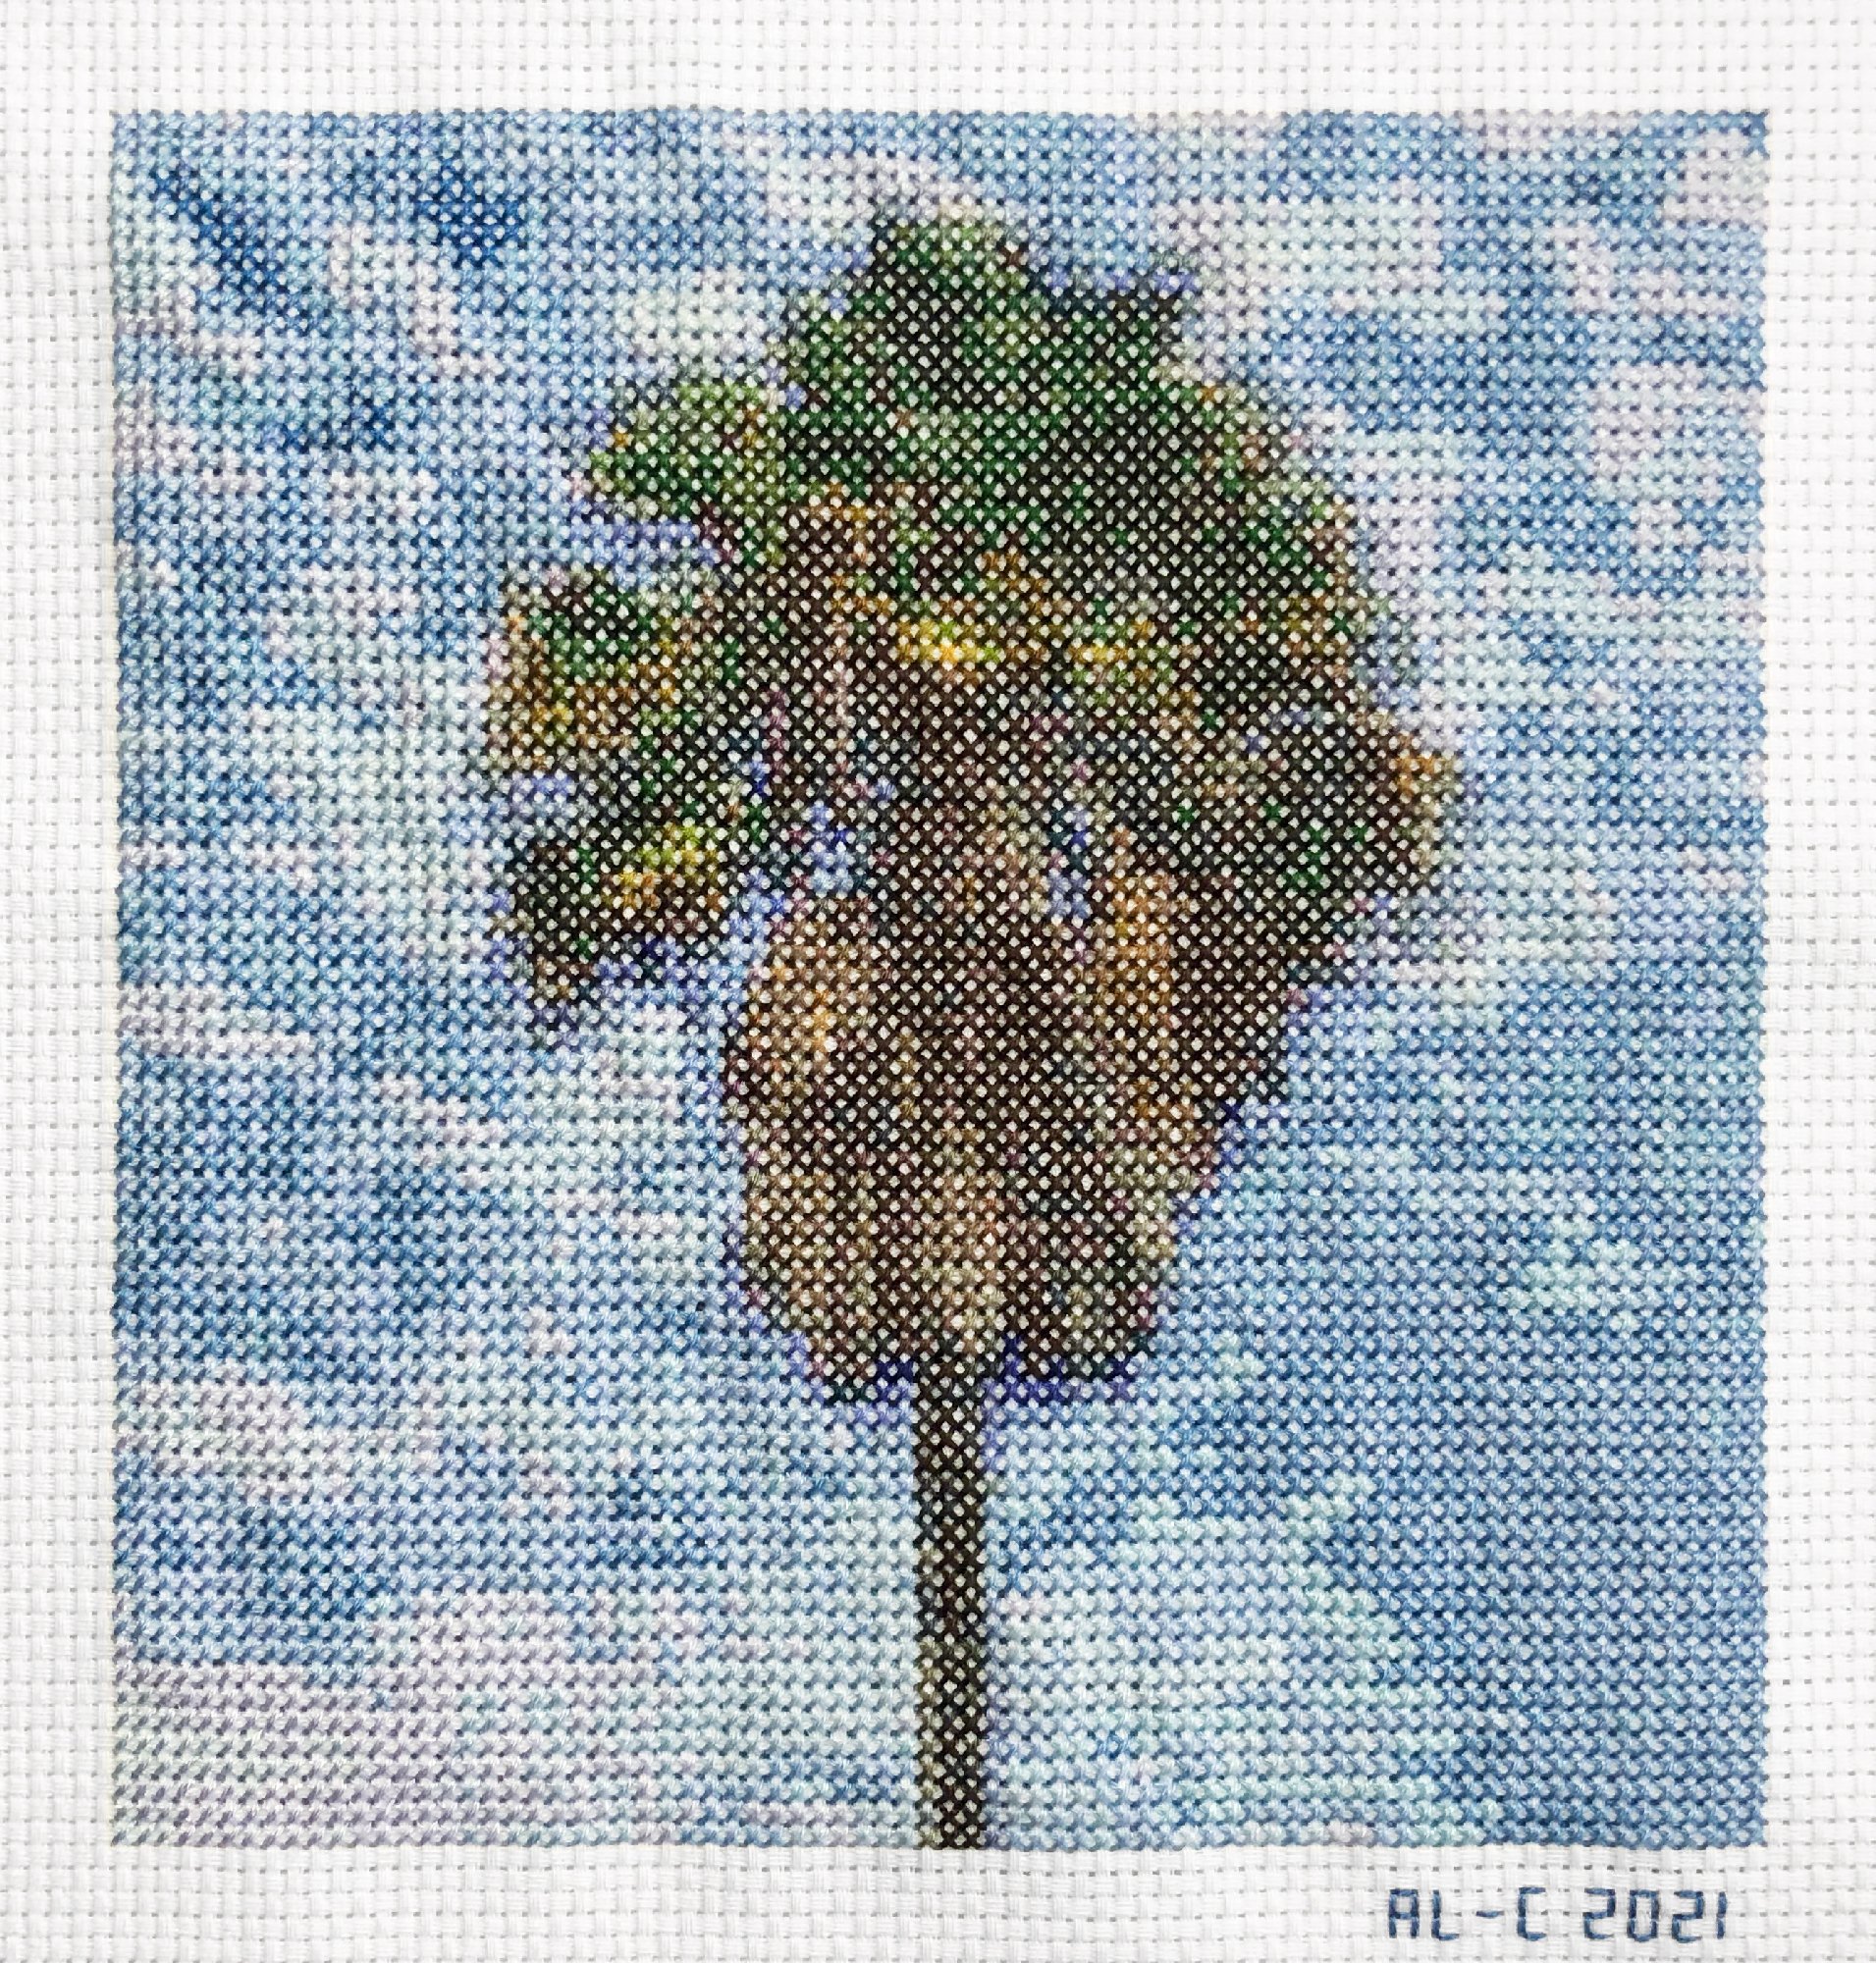   Palms 8   6.8 x 6.8 inches  Cotton thread on aida cloth  2021 